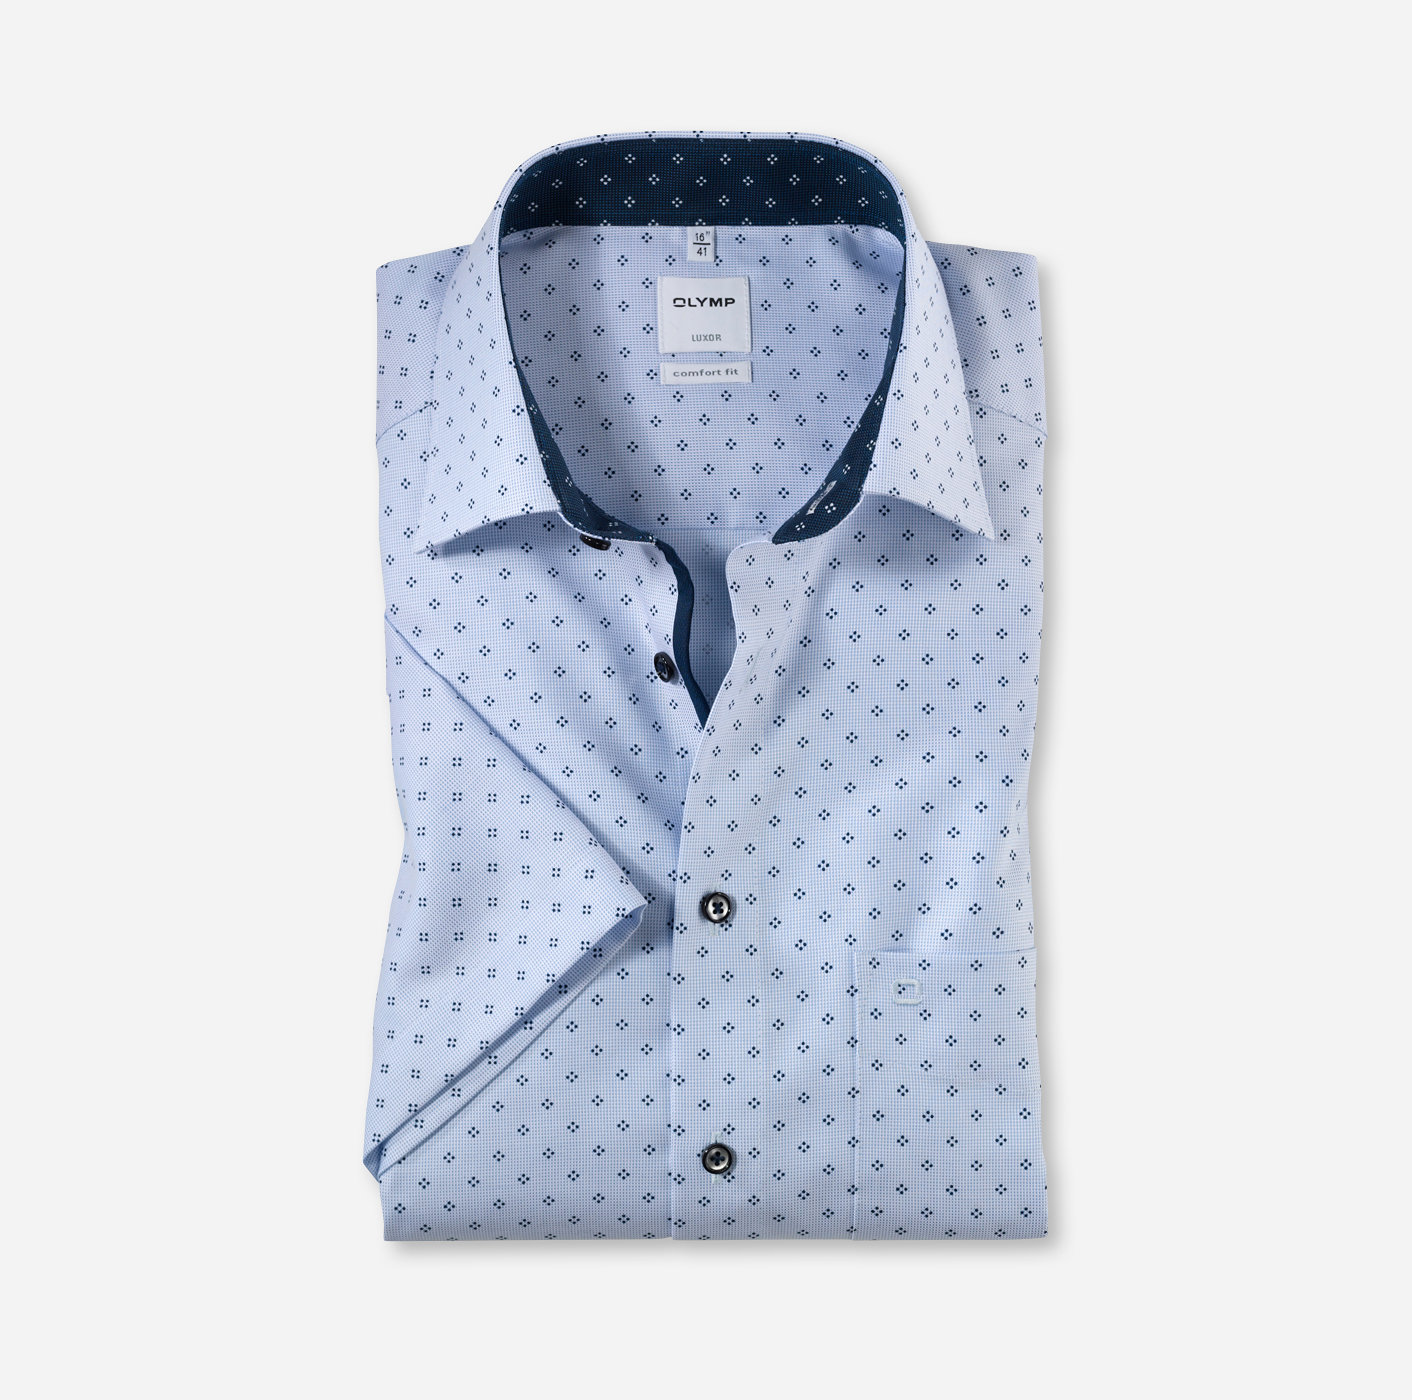 OLYMP Luxor, comfort fit, Business shirt, New Kent, Bleu Roi